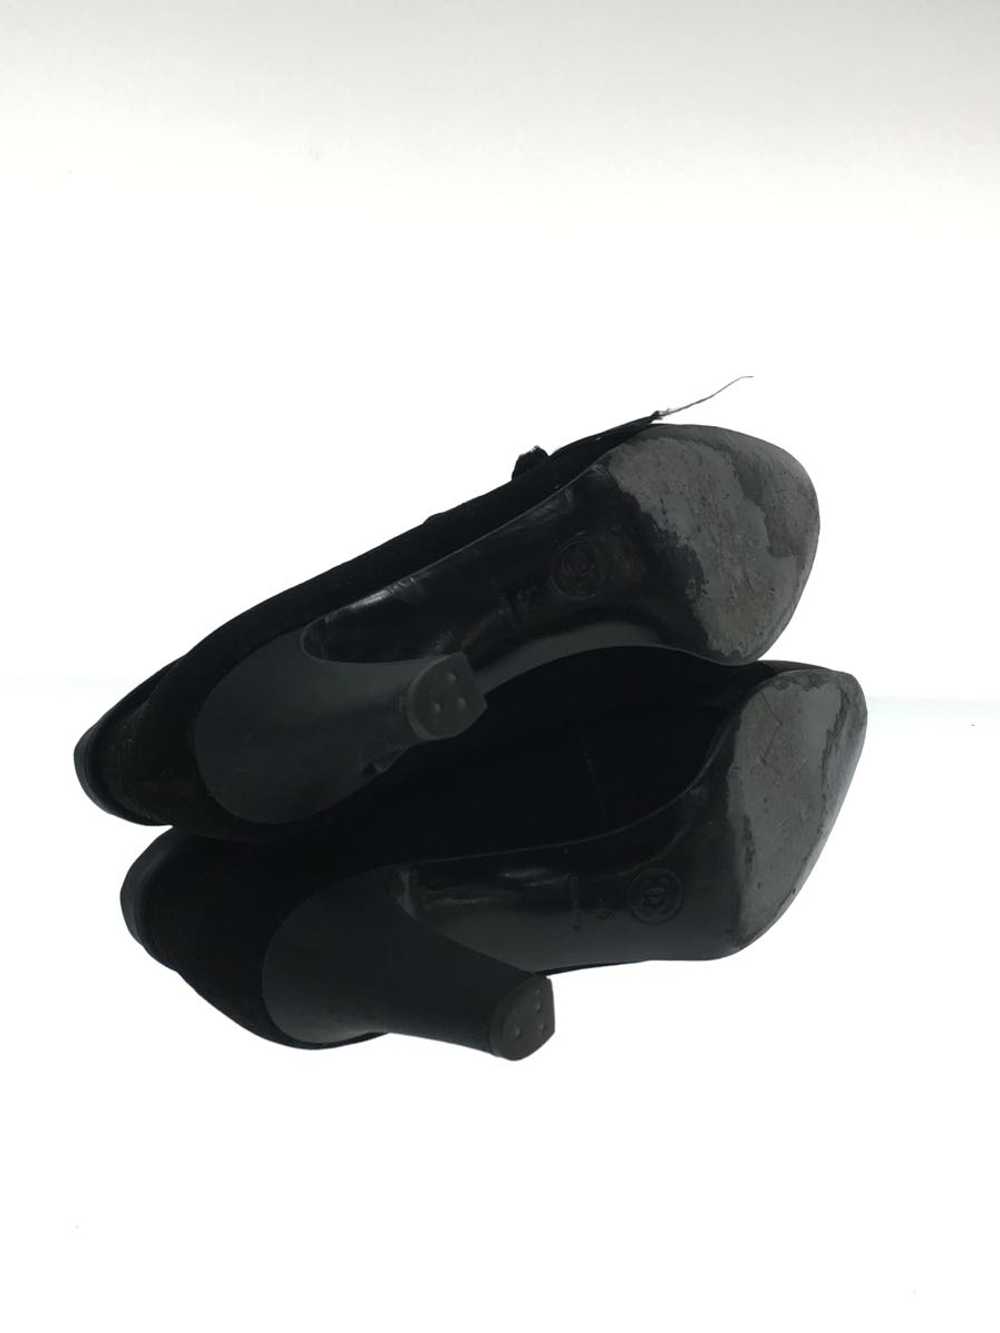 Chanel Pumps/36/Black/Suede Shoes Bbv86 - image 4